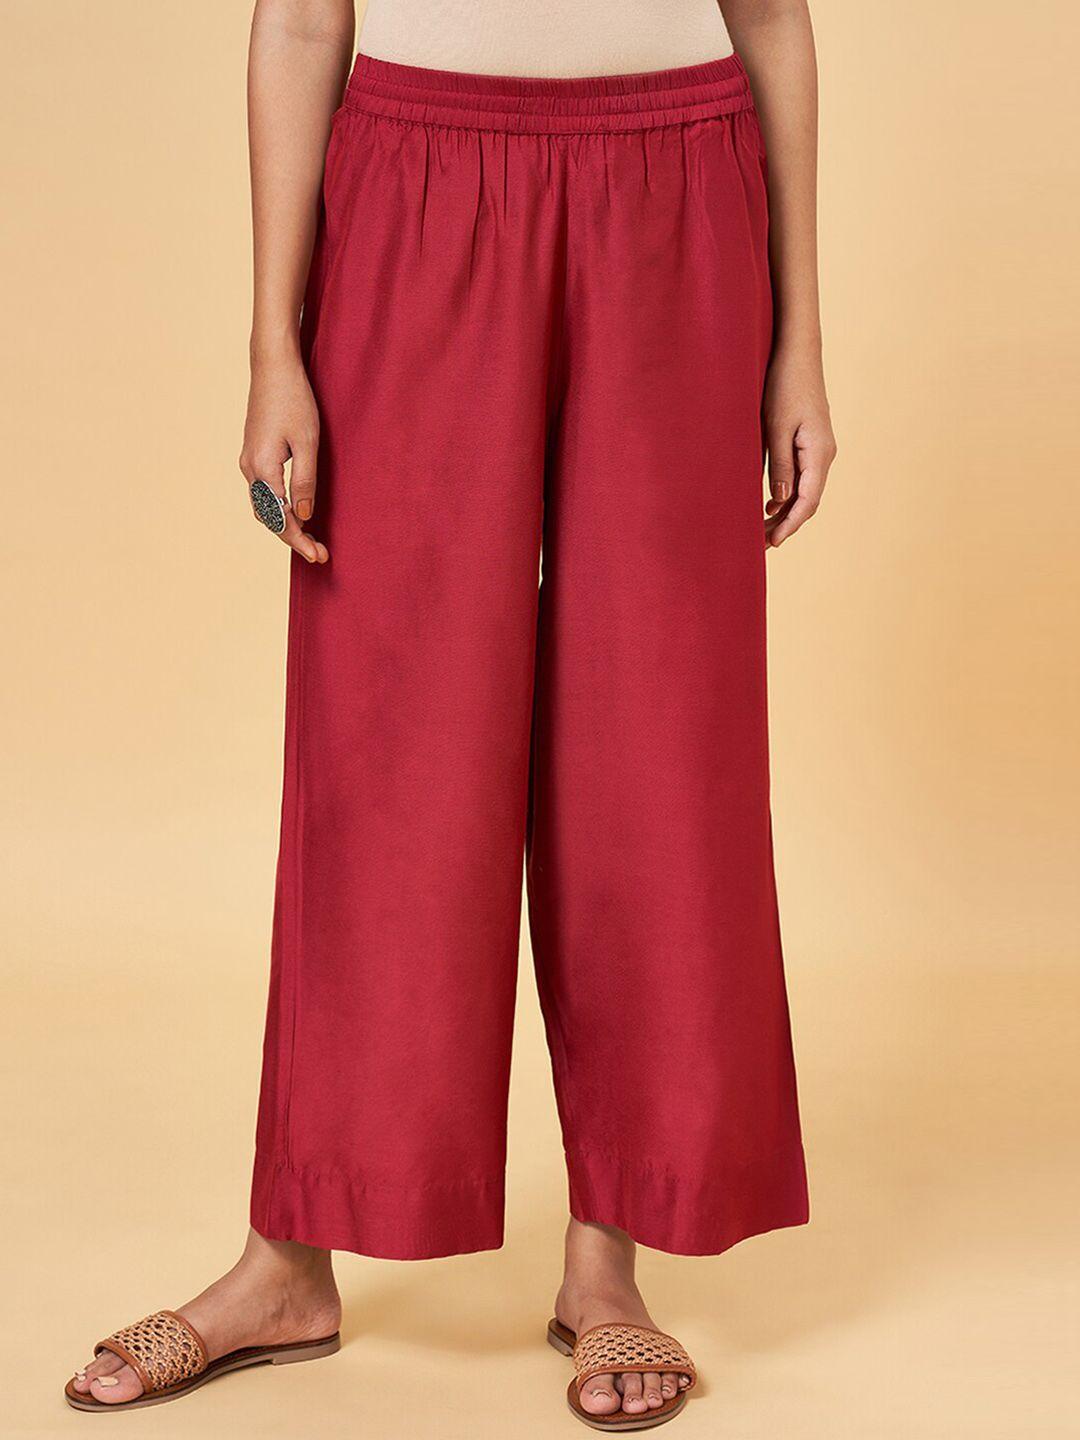 rangmanch by pantaloons women maroon printed trousers